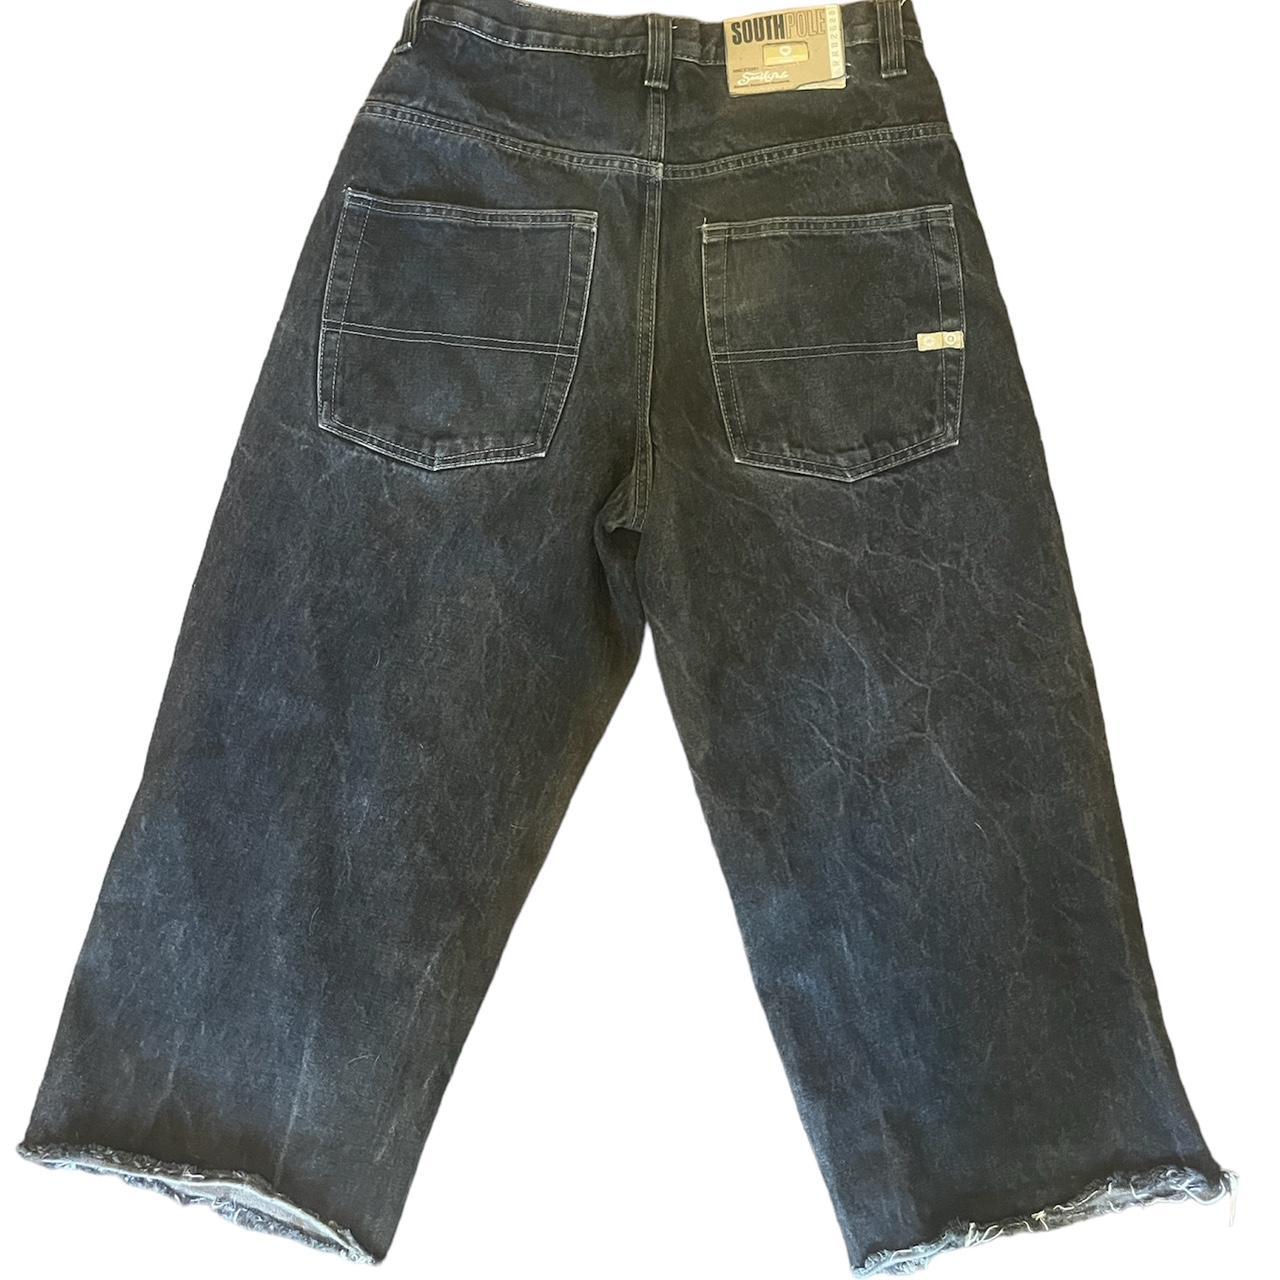 Super baggy southpole jeans size 32 Cut to 35... - Depop